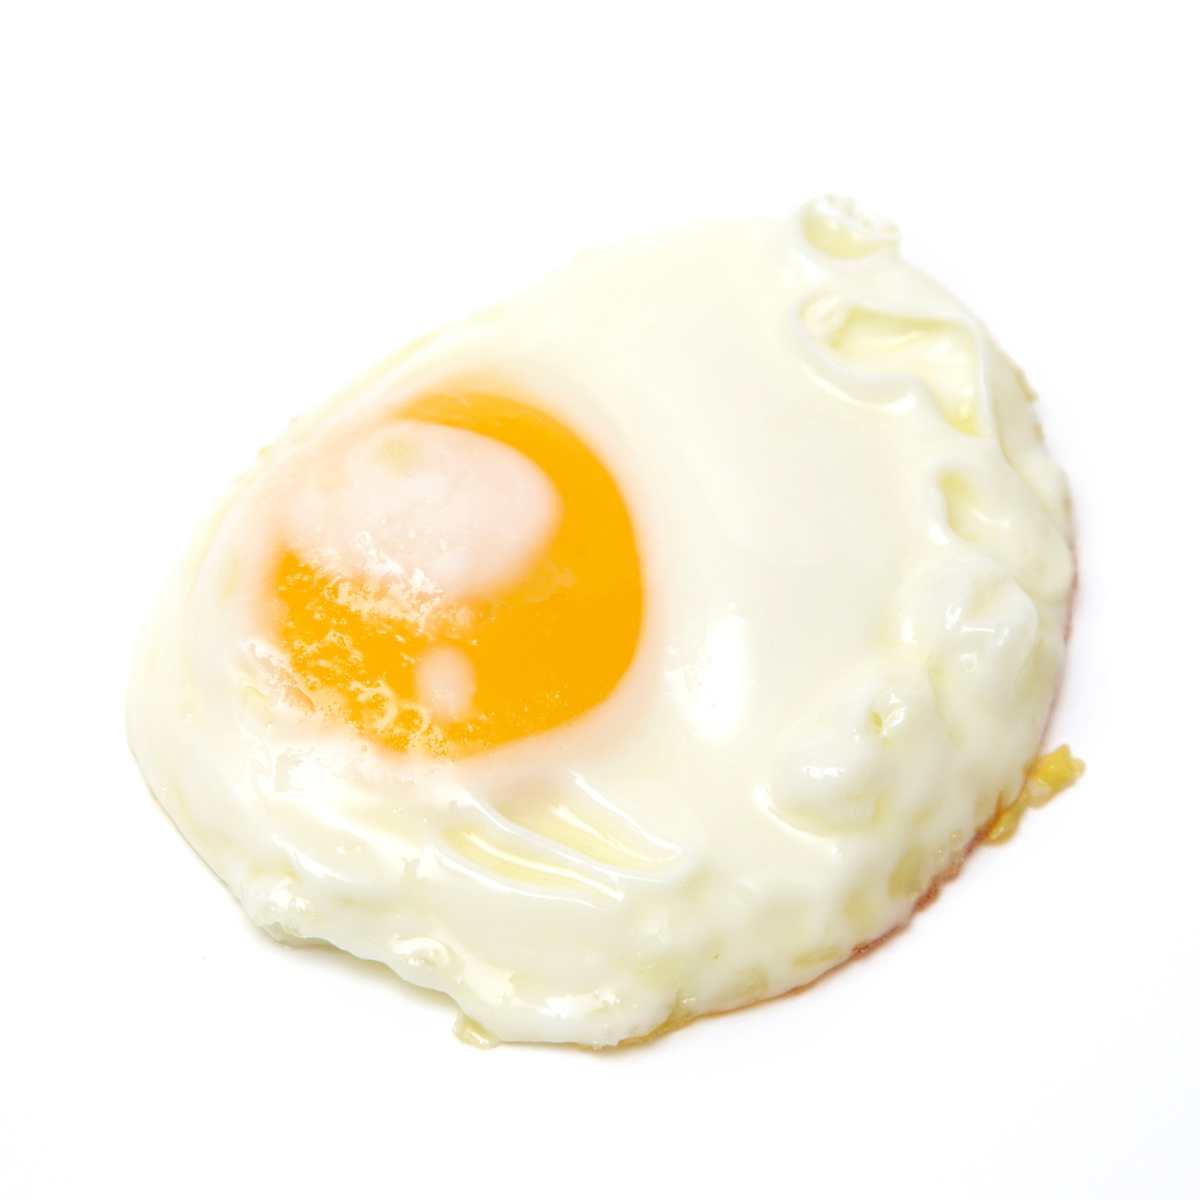 Over easy egg on a white background.